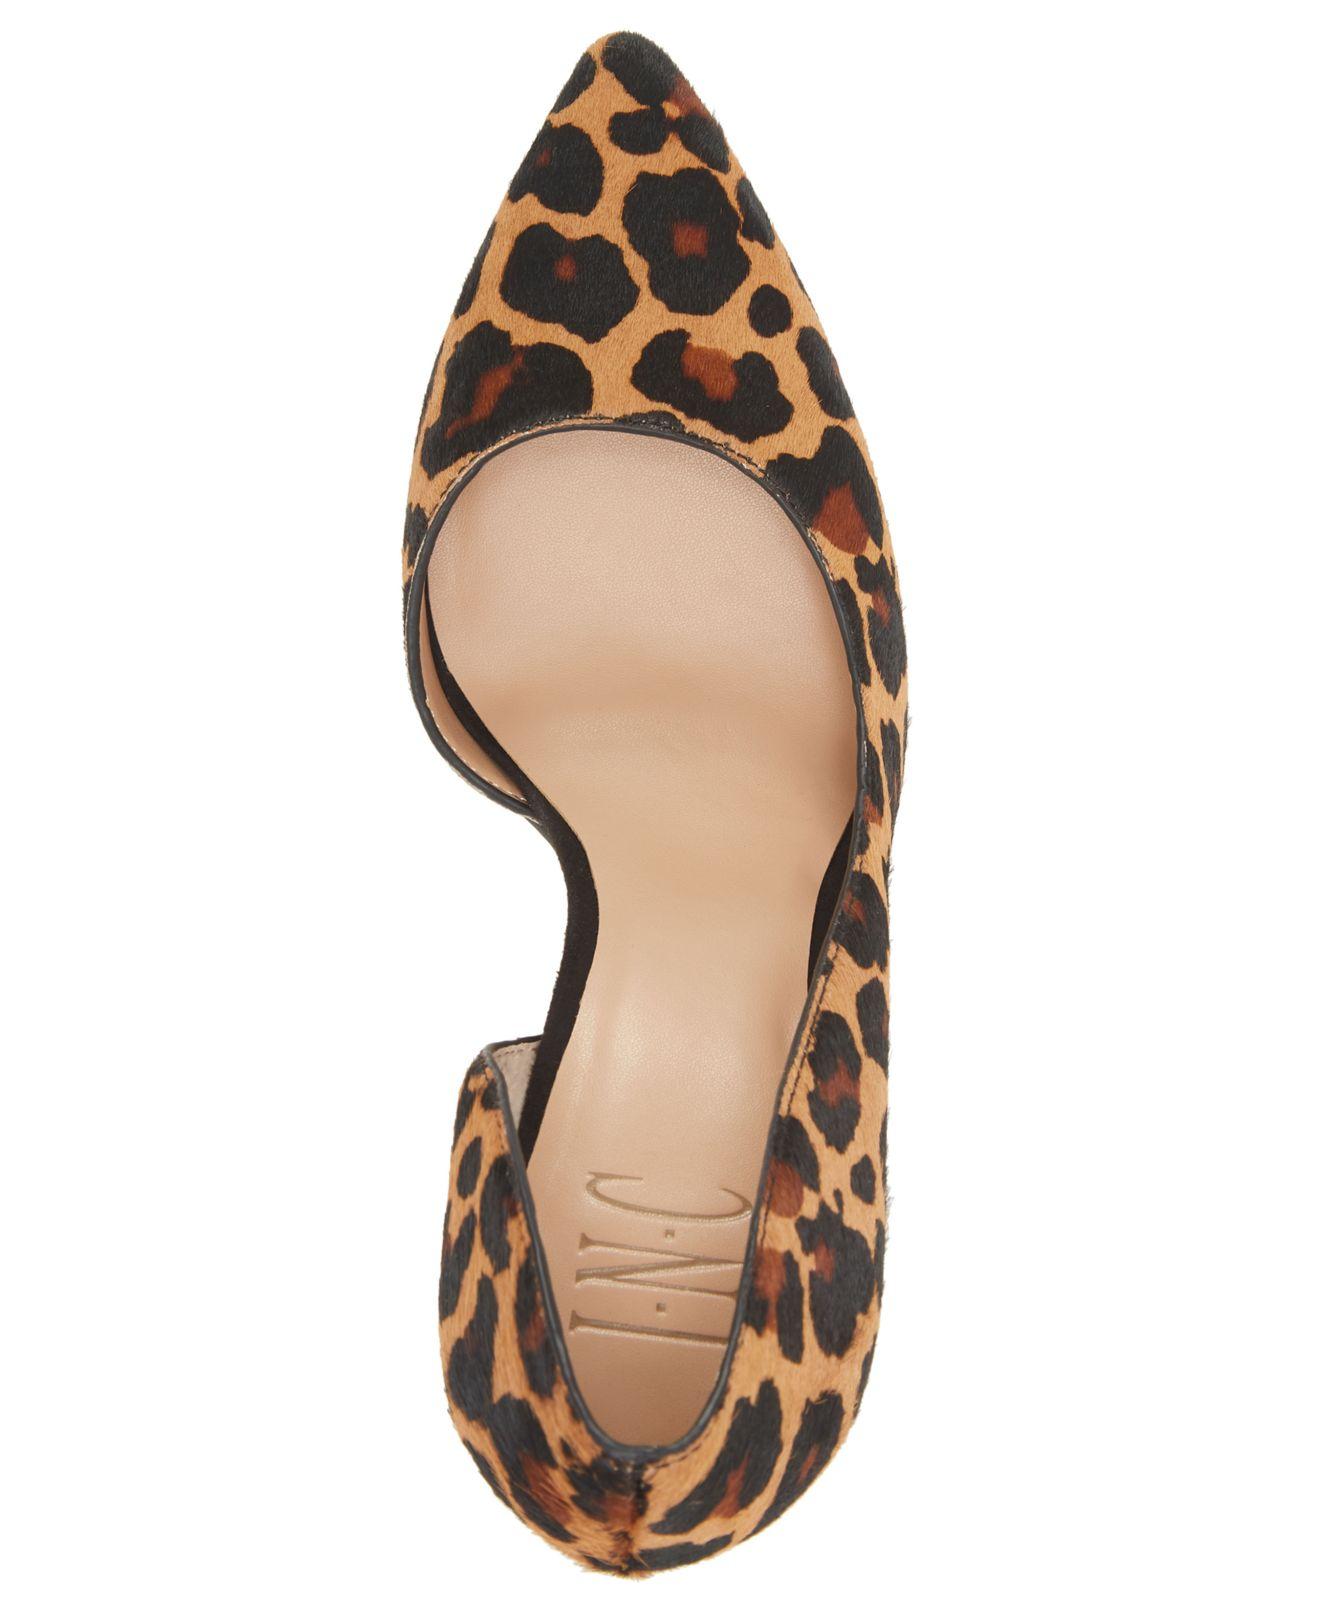 macy's leopard heels